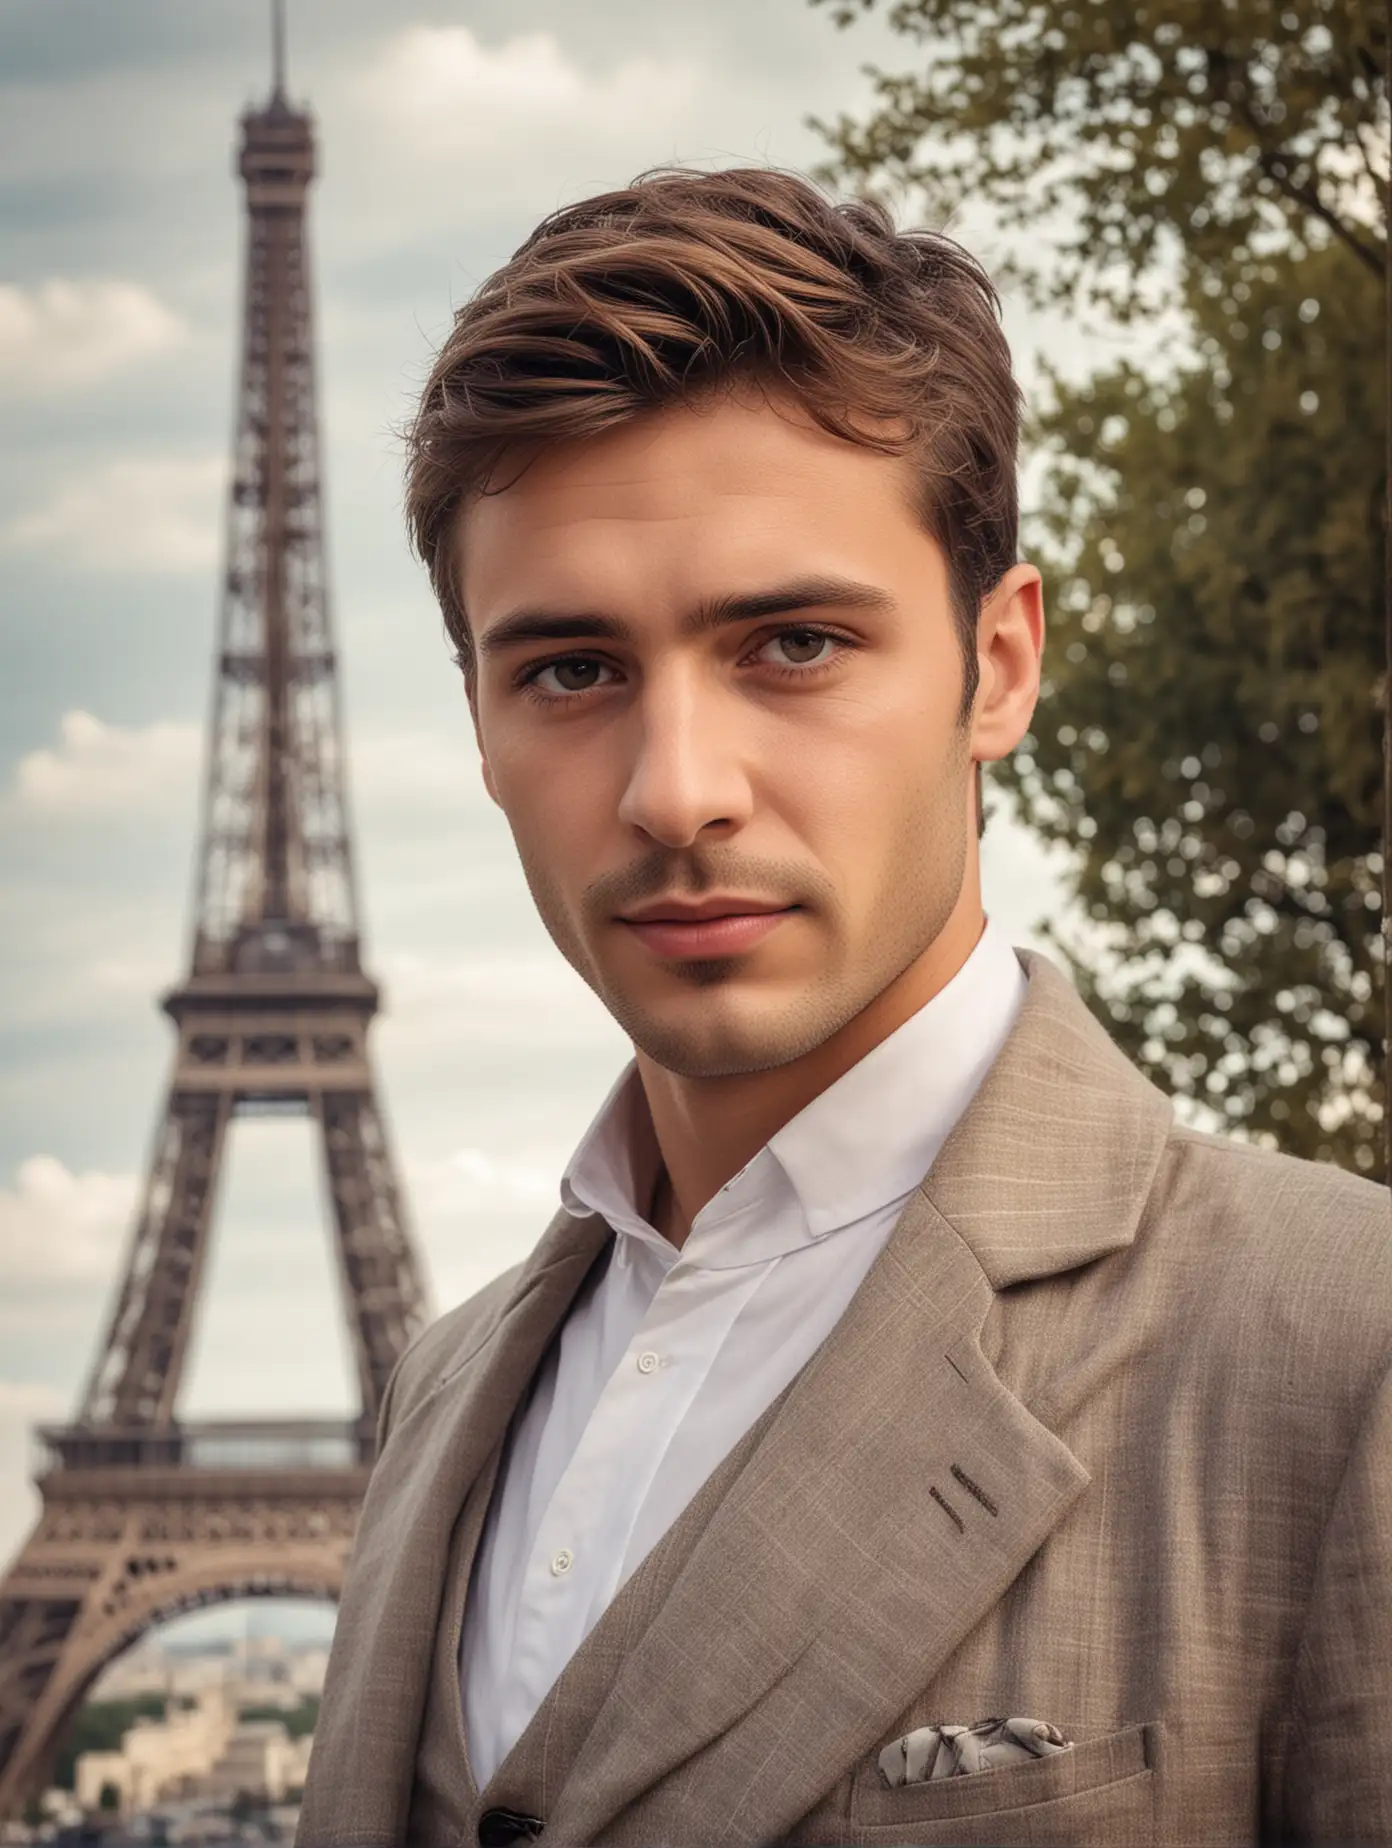 French Man in Elegant Attire with Eiffel Tower Backdrop